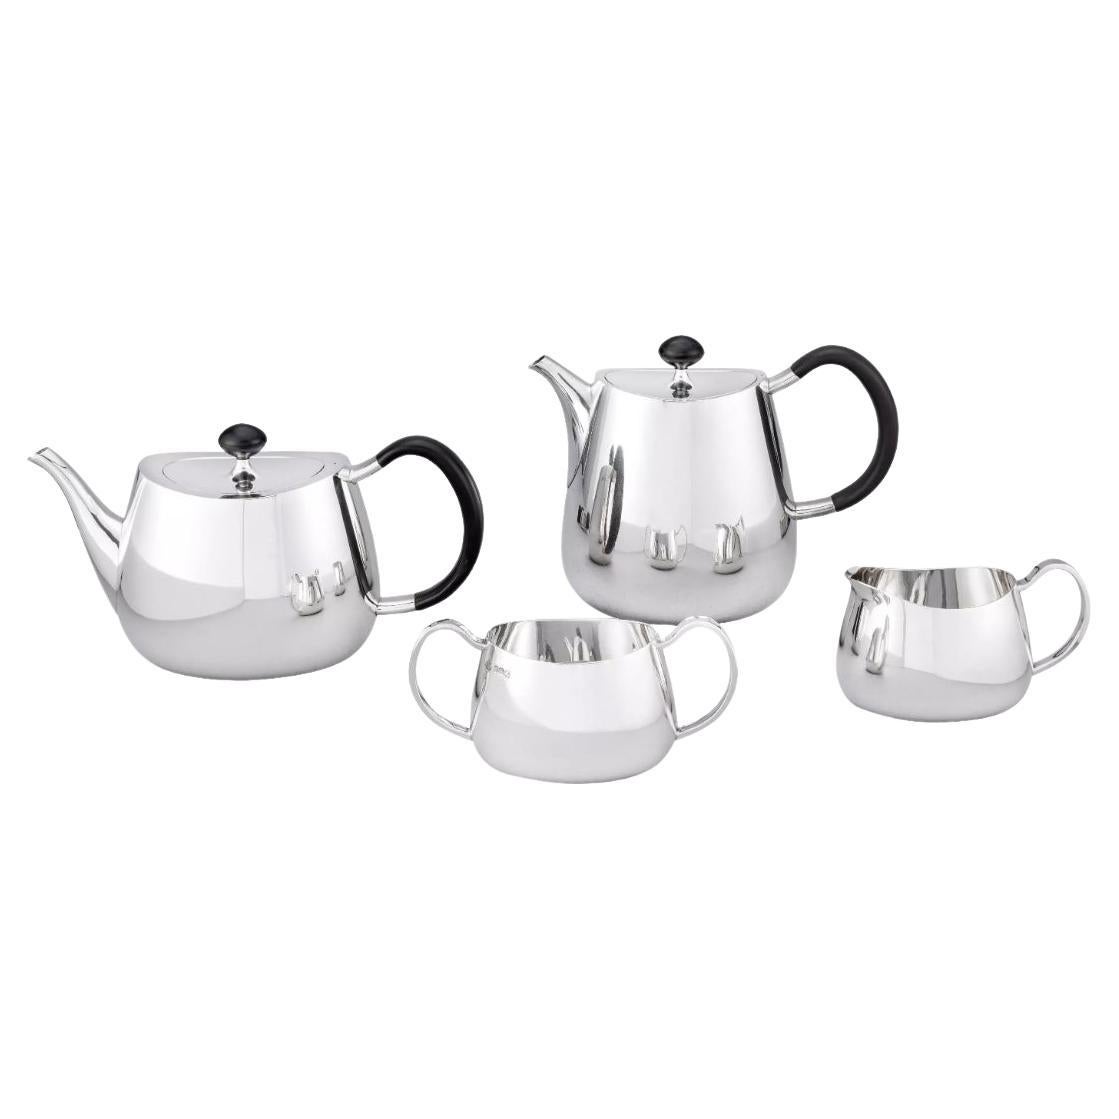  A silver "Pride pattern" Tea & Coffee Service For Sale